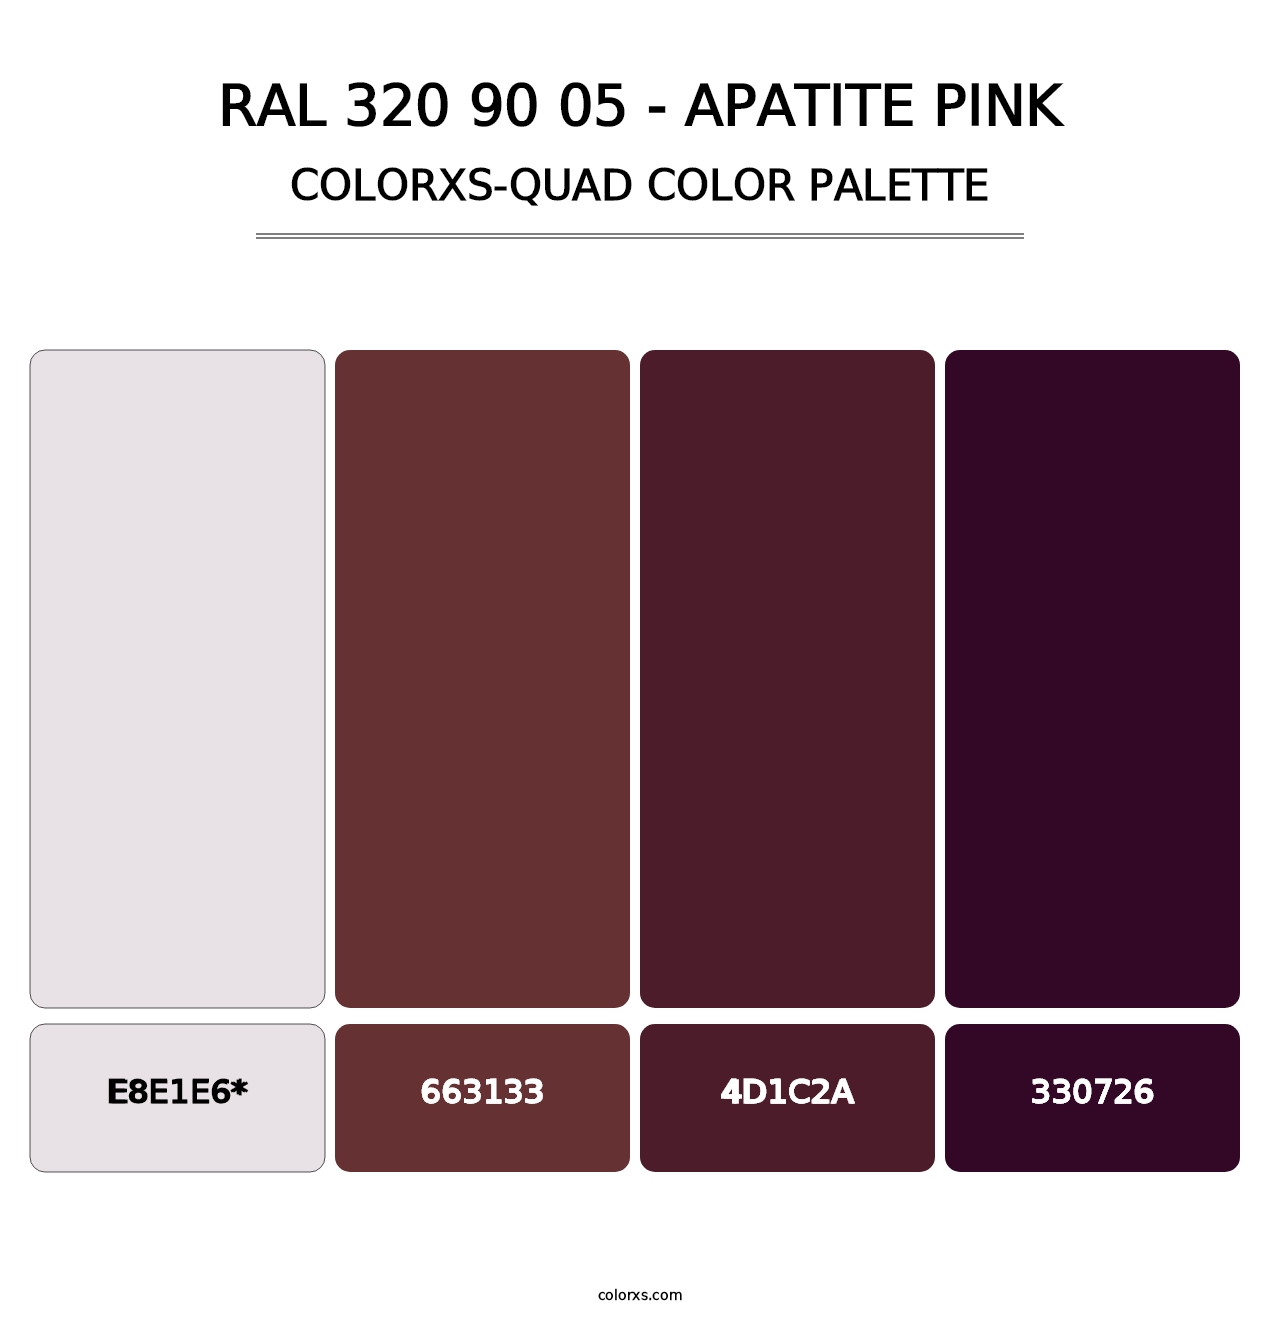 RAL 320 90 05 - Apatite Pink - Colorxs Quad Palette